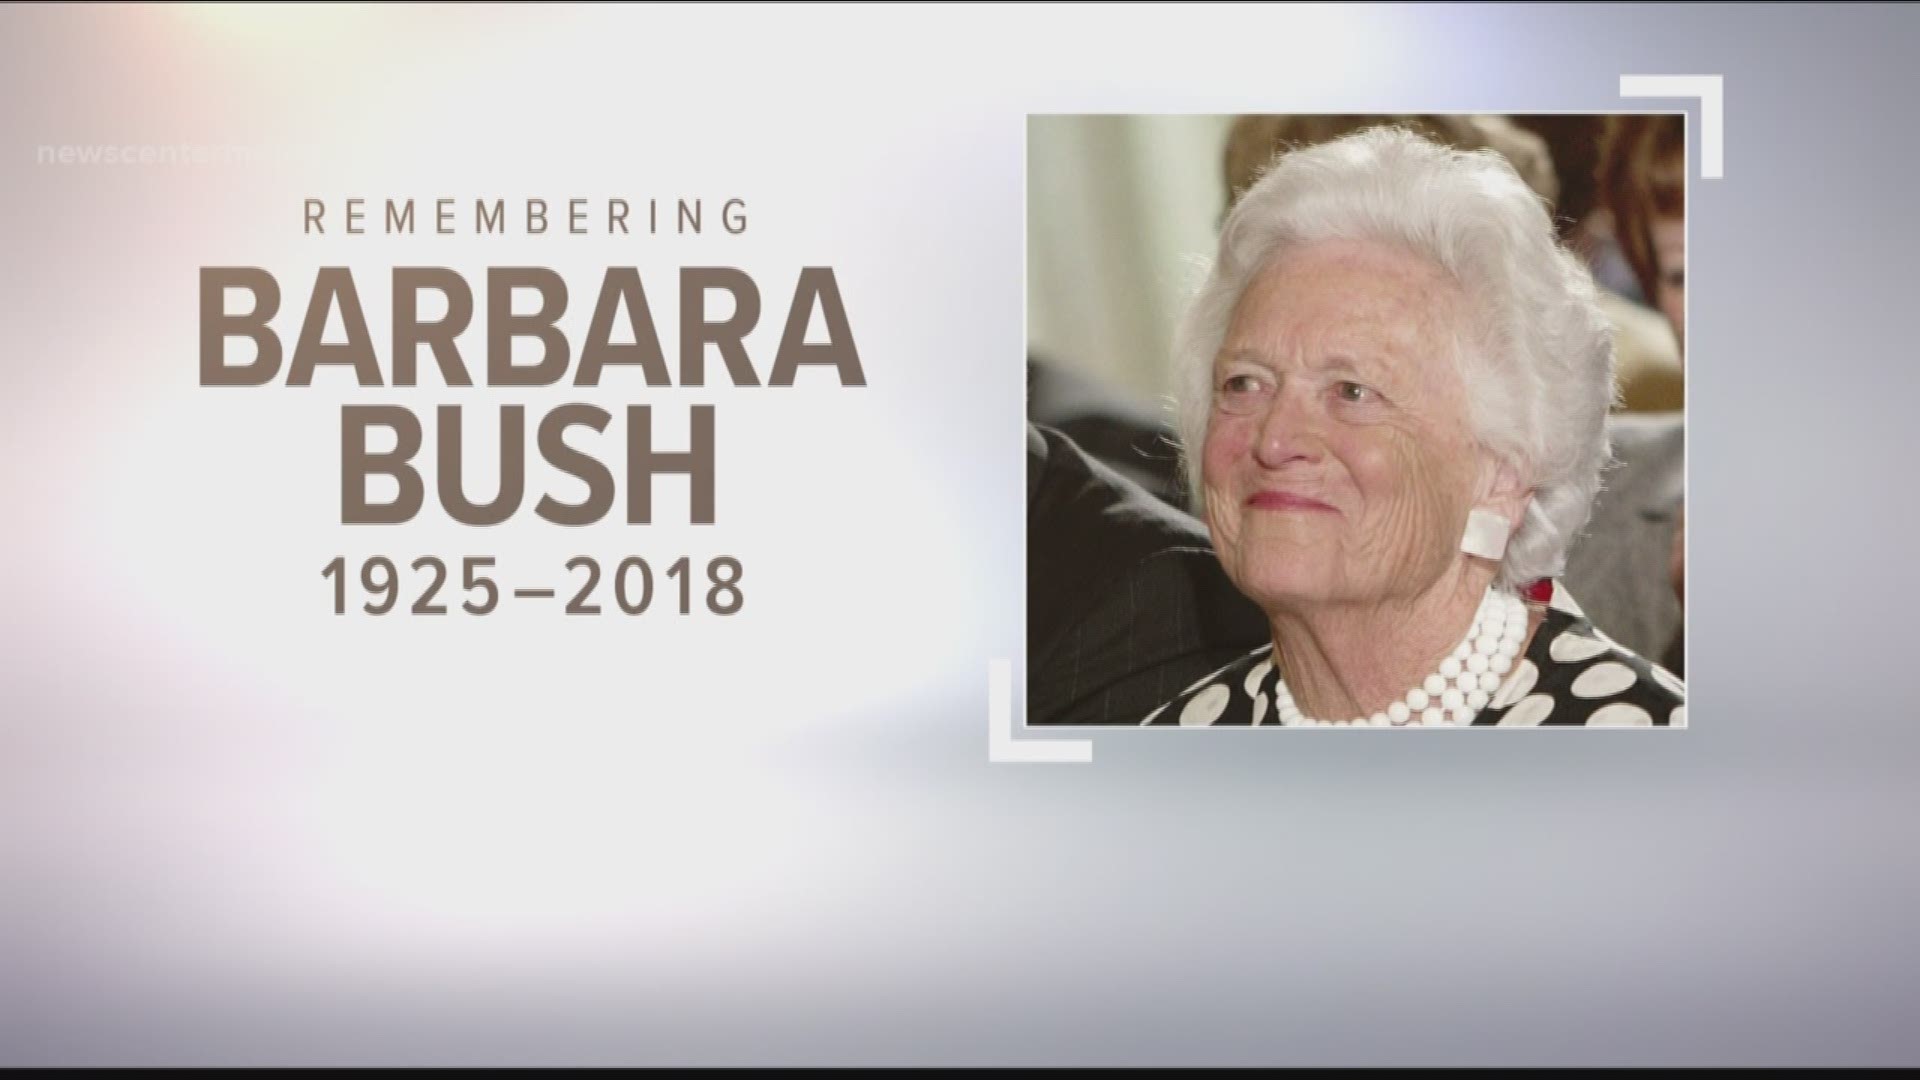 Barbra Bush: Beach walk and funeral notes